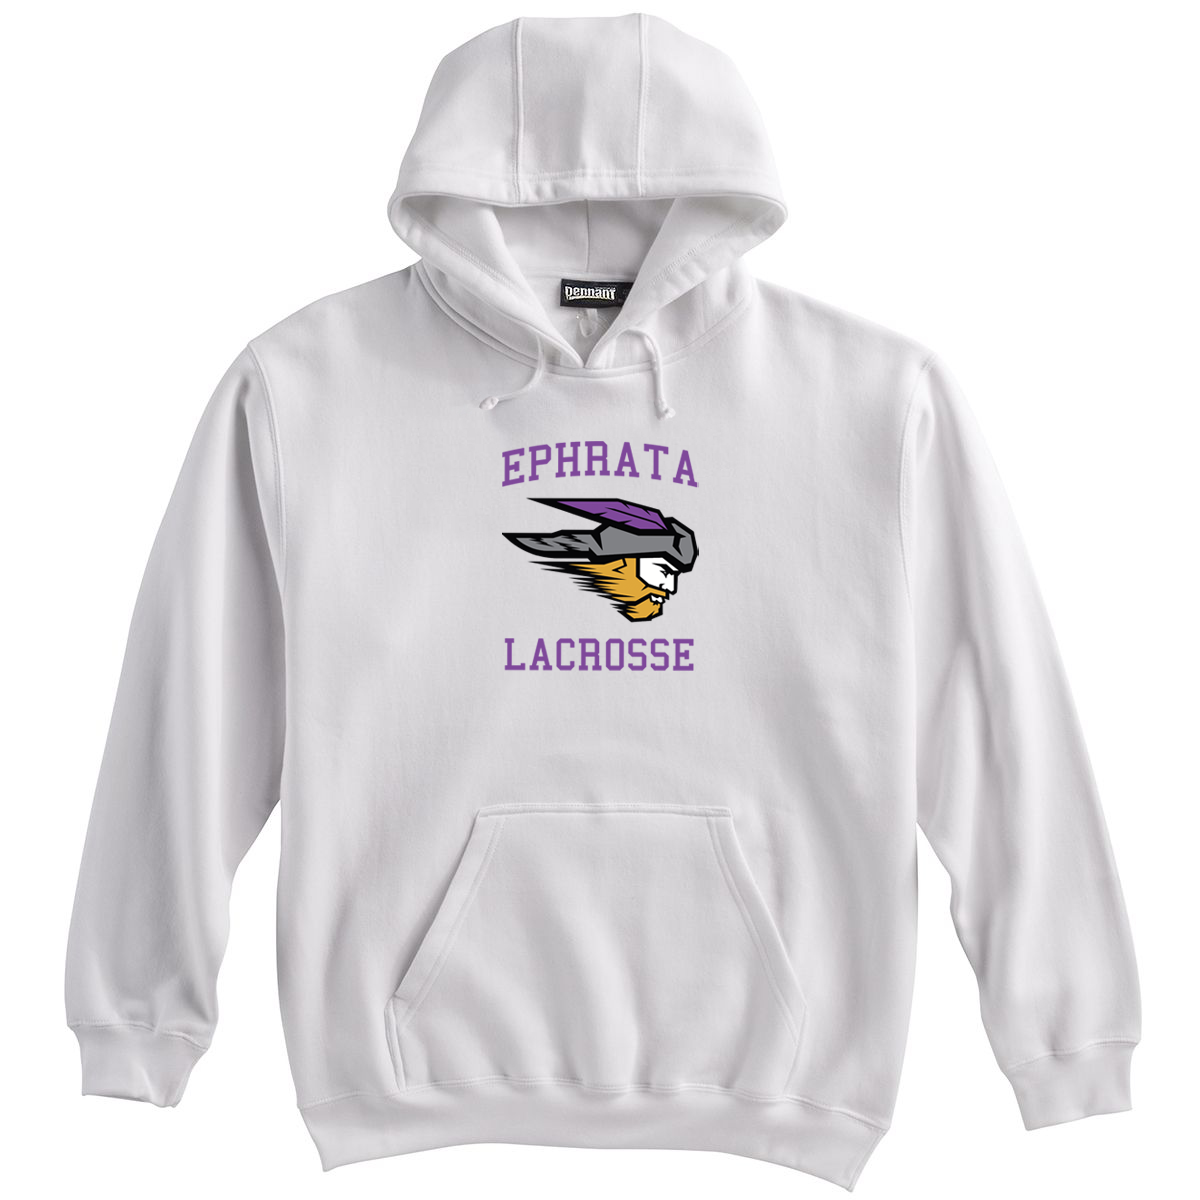 Ephrata Lacrosse Sweatshirt